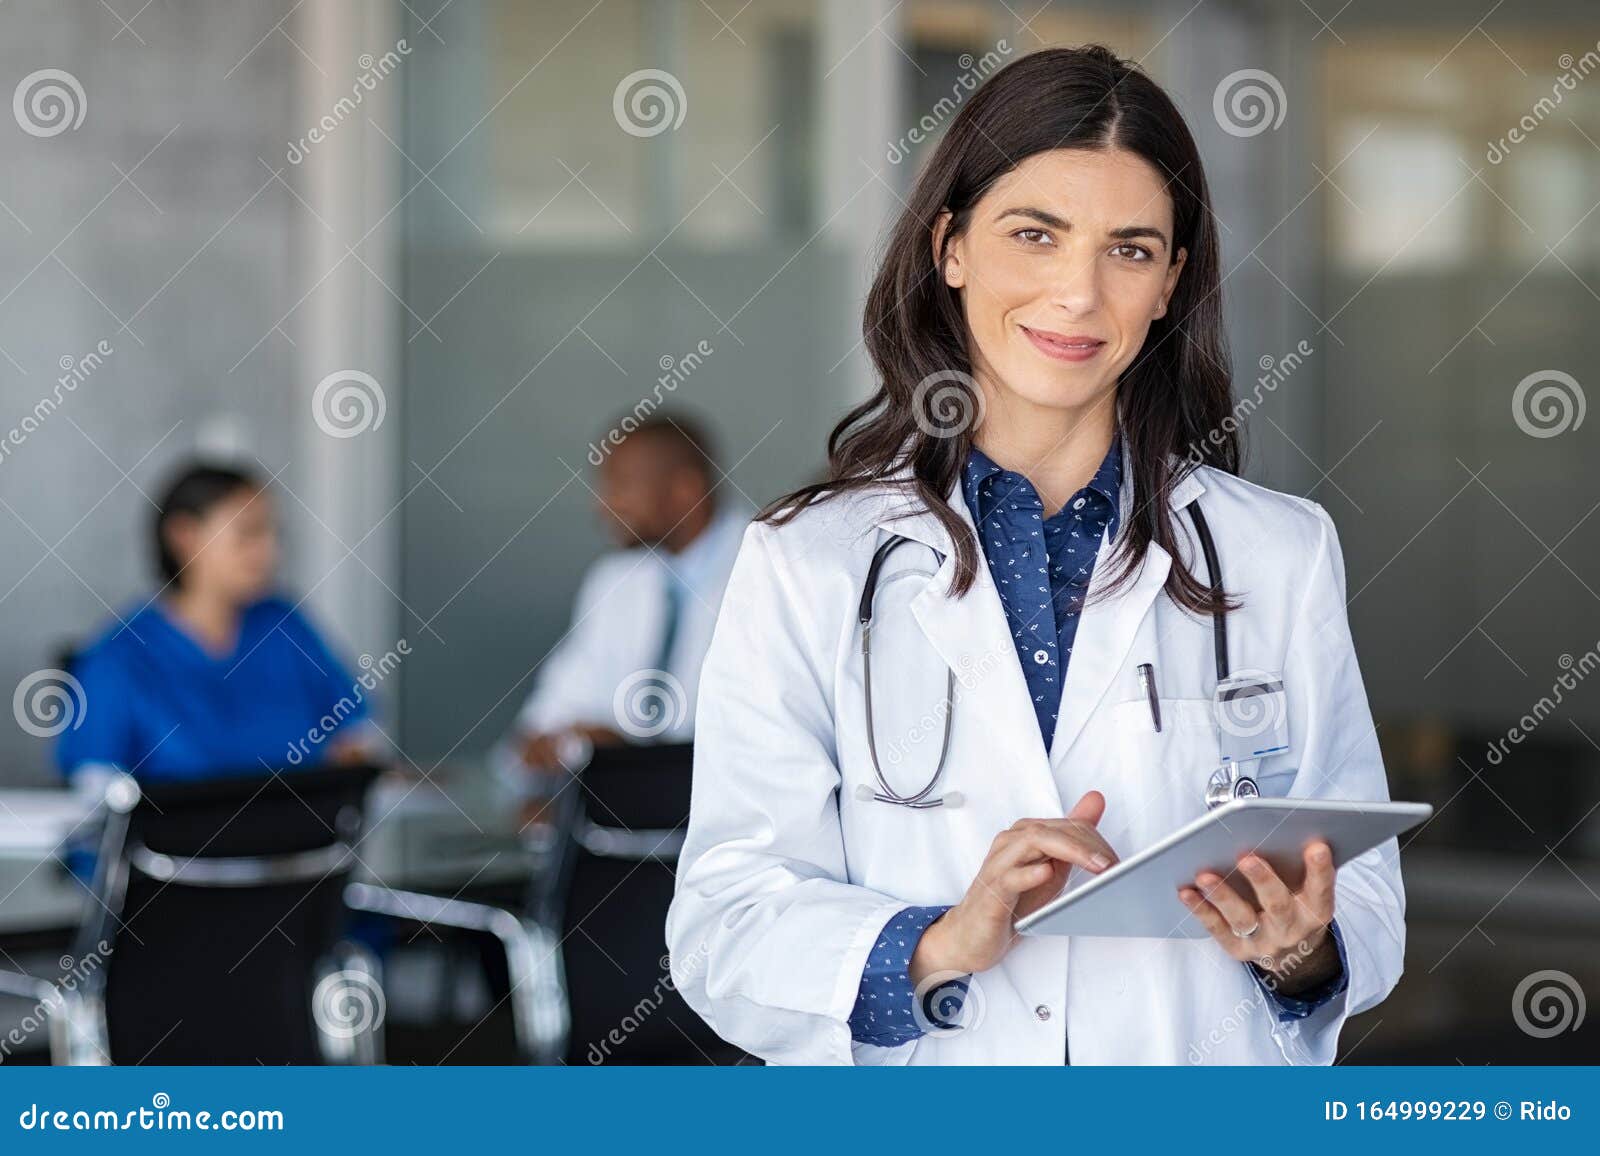 doctor holding digital tablet at meeting room